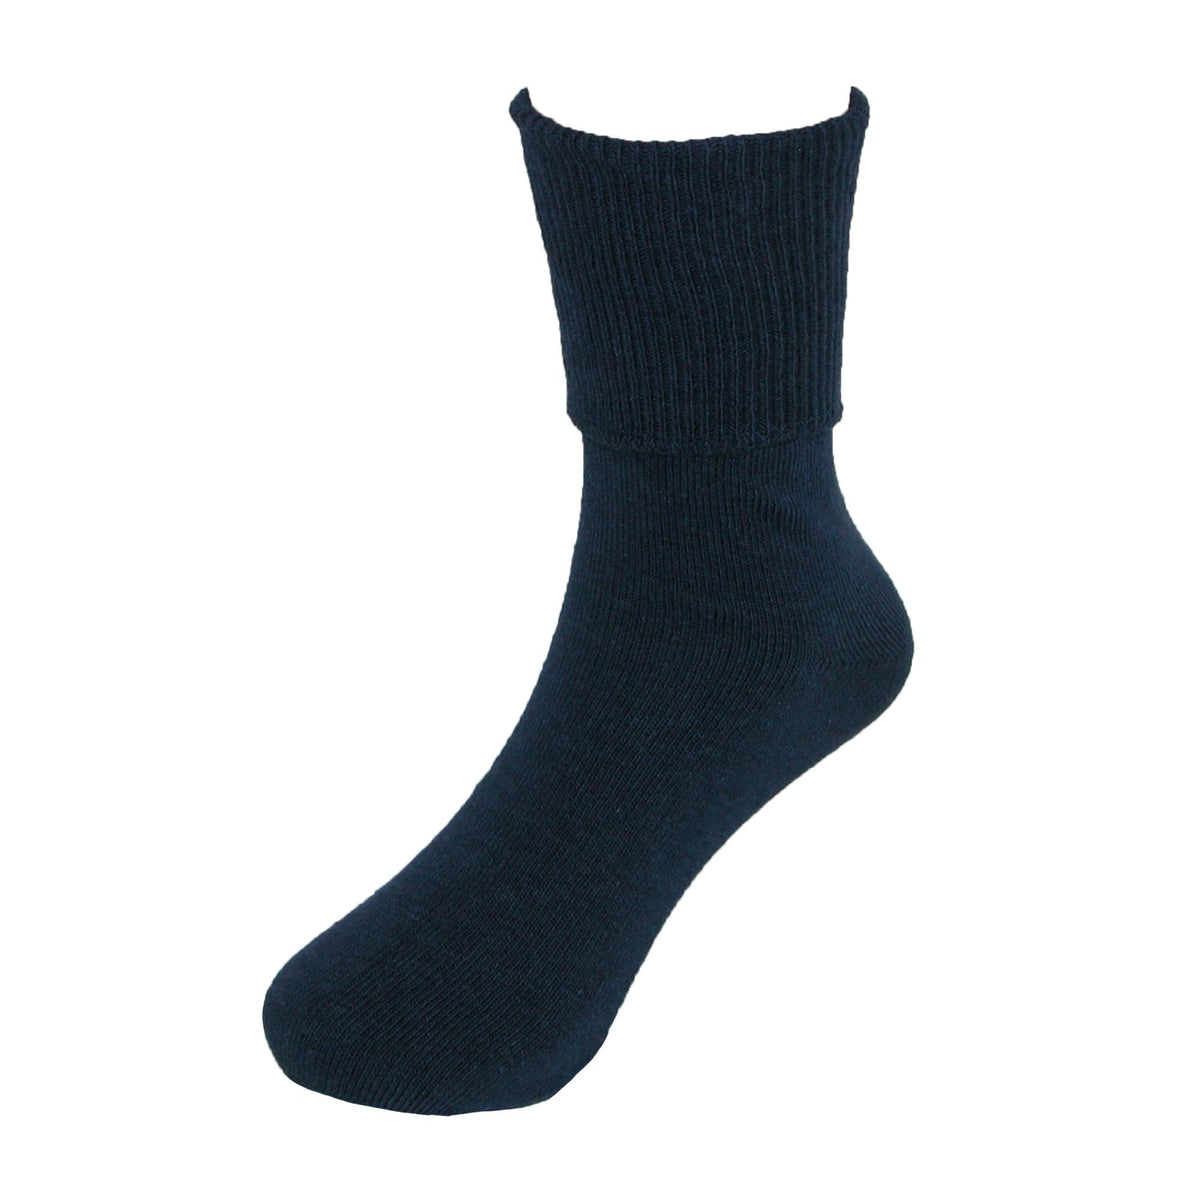 School Uniform Seamless Turn Cuff Anklet Socks by Jefferies Socks ...